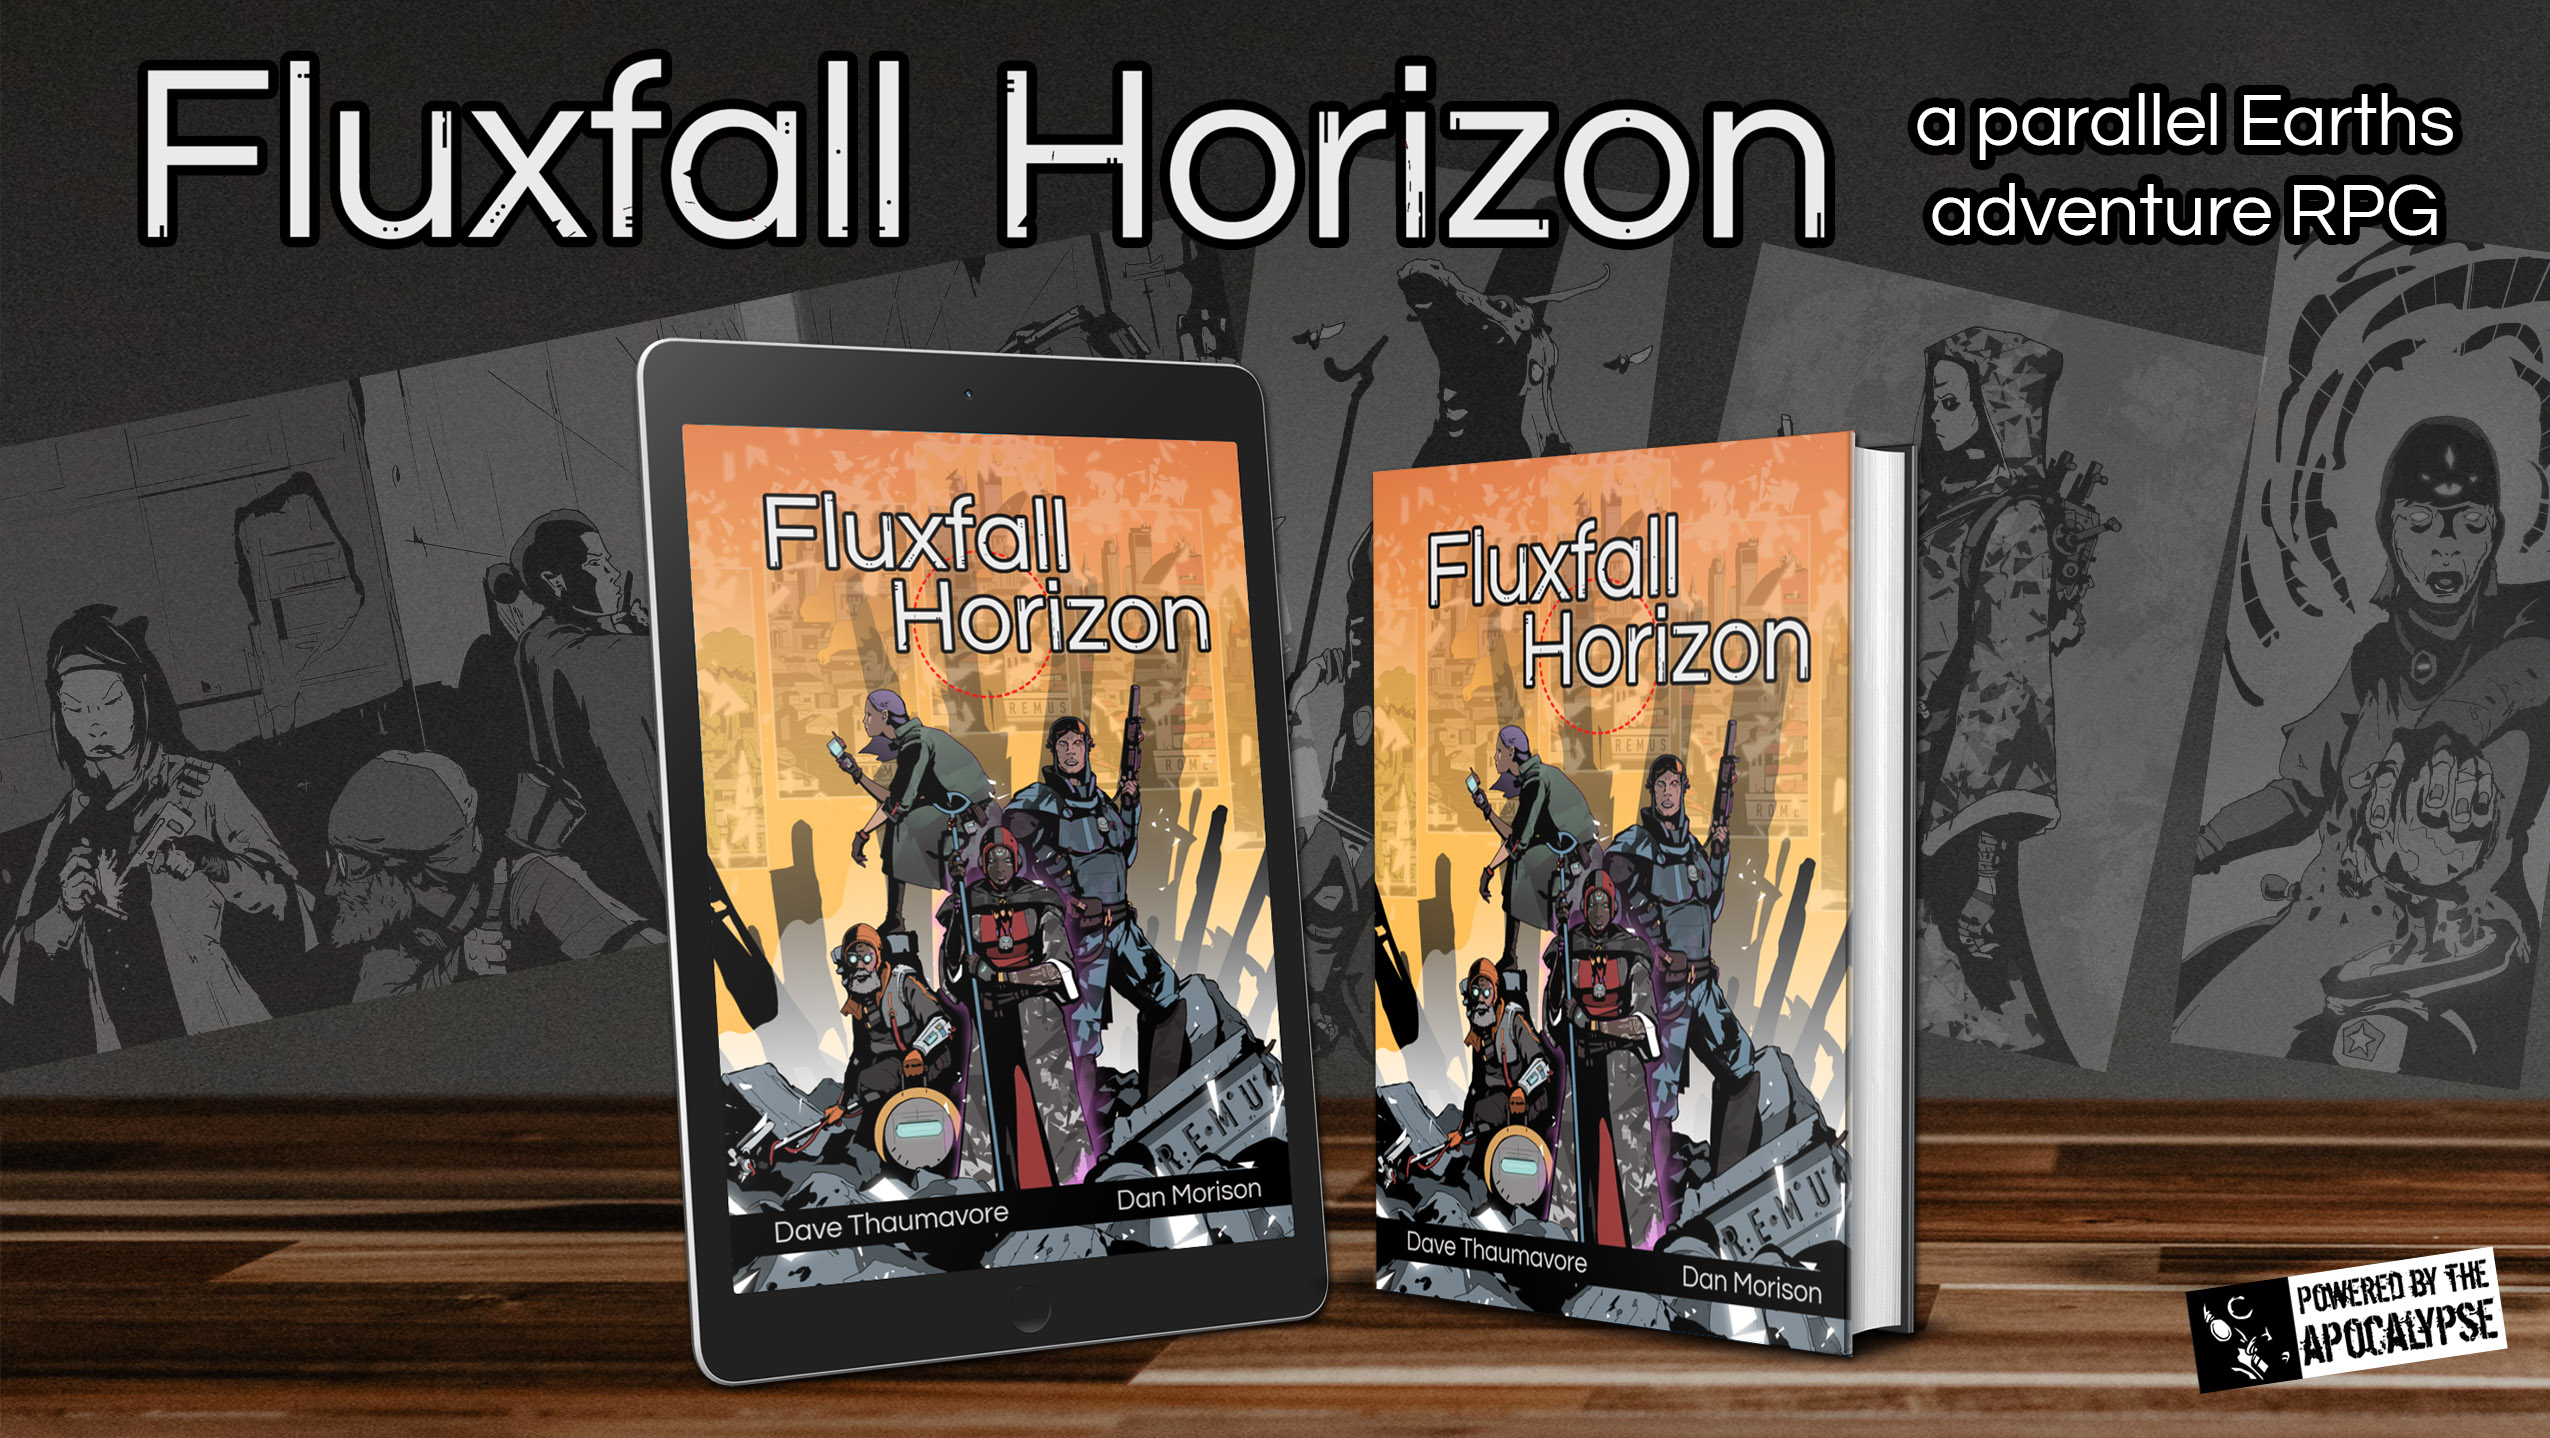 Buy Fluxfall Horizon in PDF from DrivethruRPG!